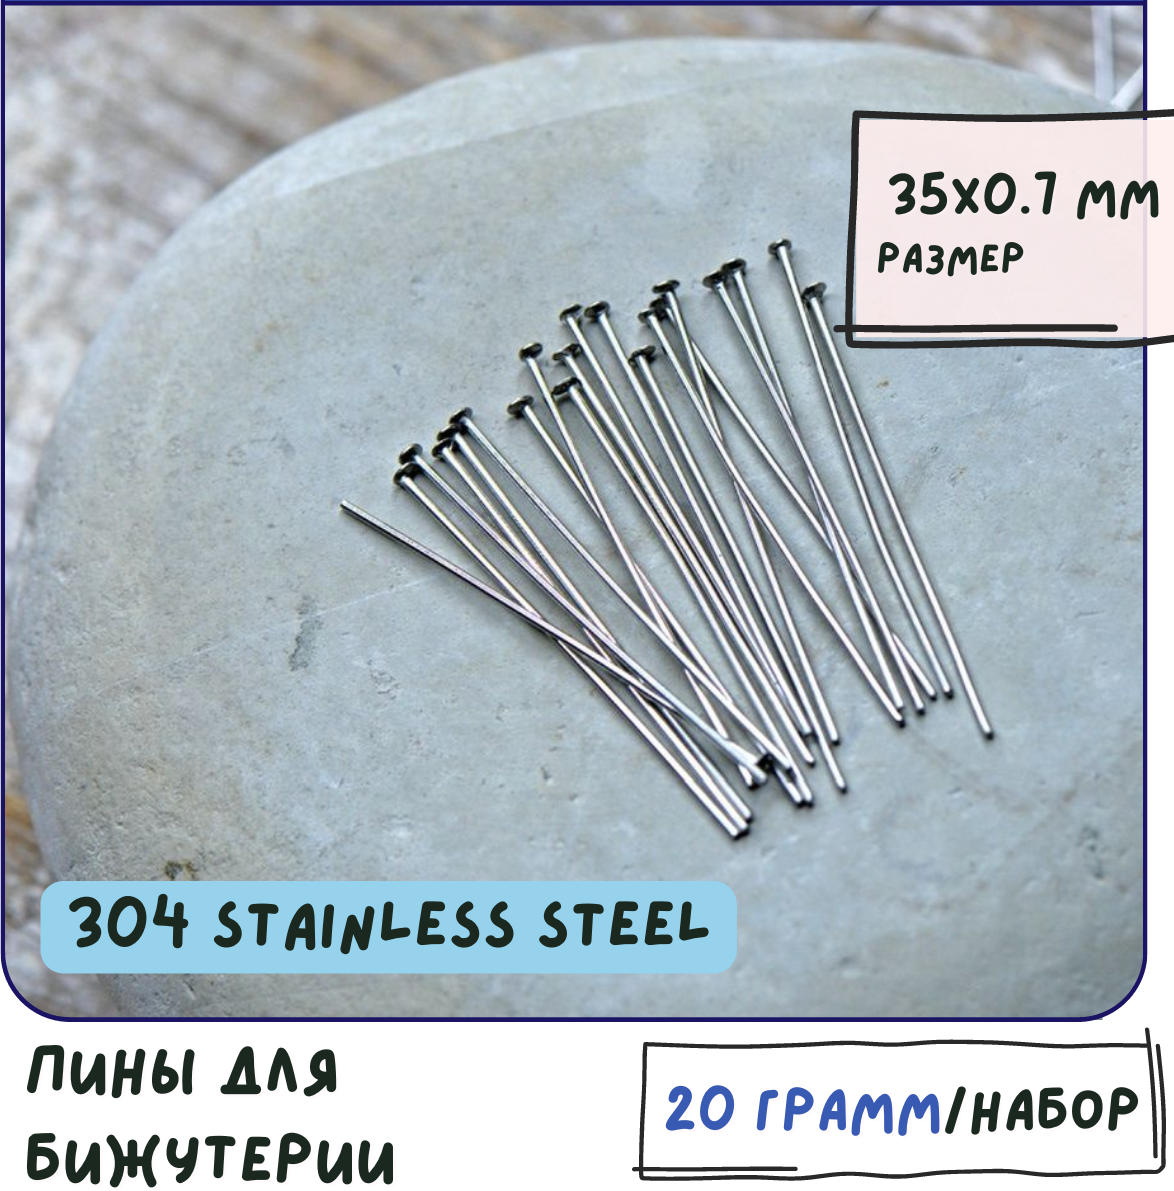 Пины-гвоздики Штифты (упаковка 20 г), нержавеющая сталь 304 Stainless Steel, размер 35х0.7 мм